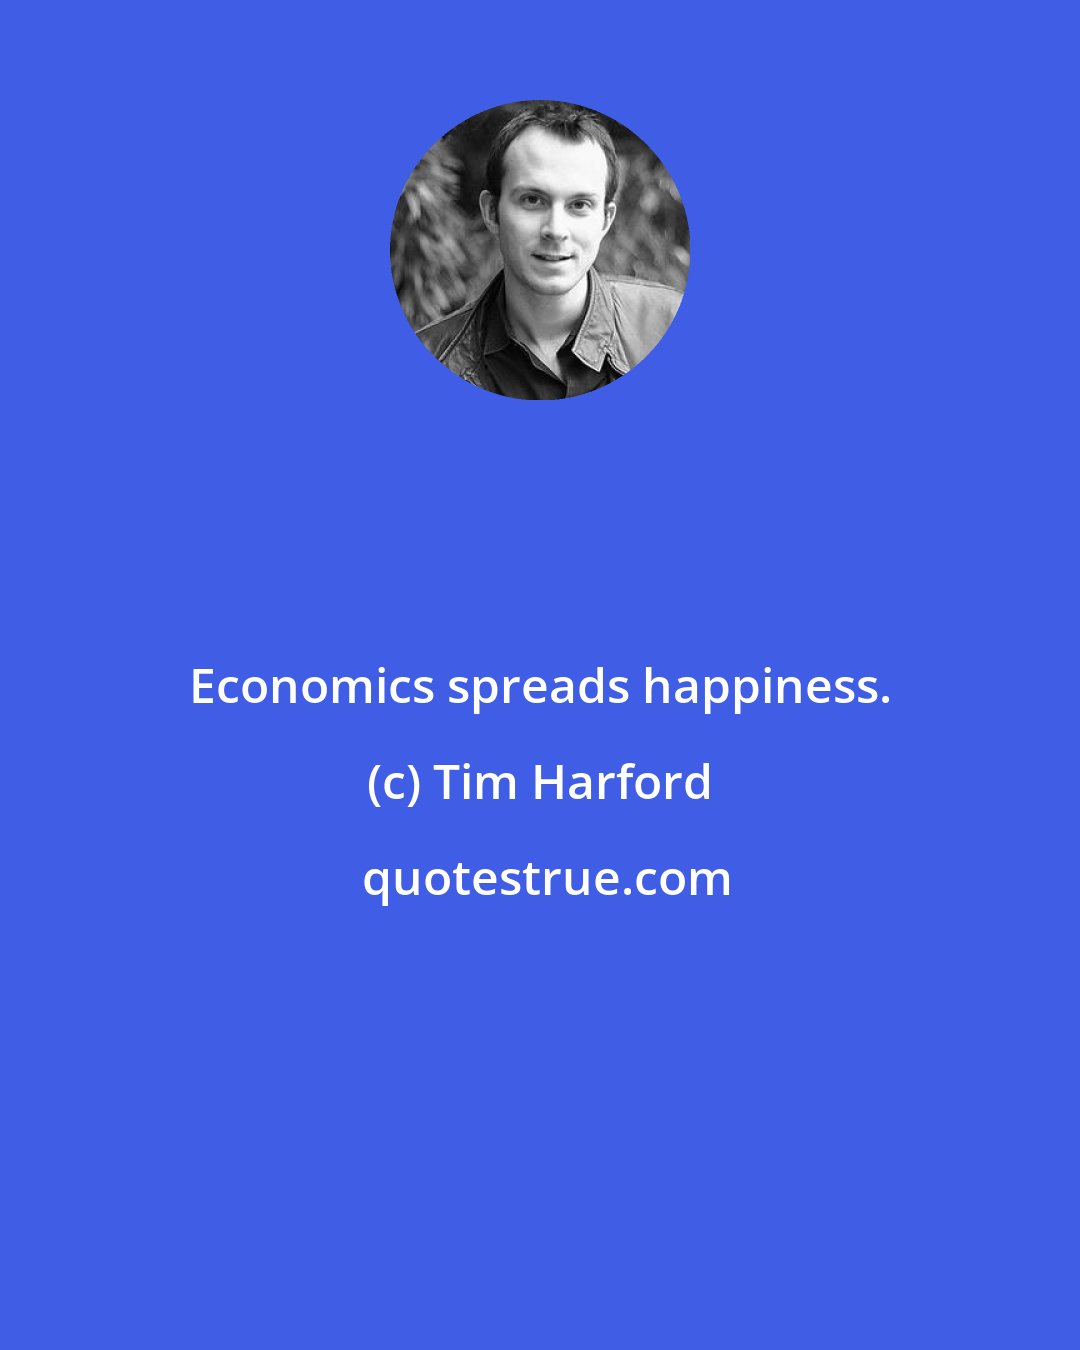 Tim Harford: Economics spreads happiness.